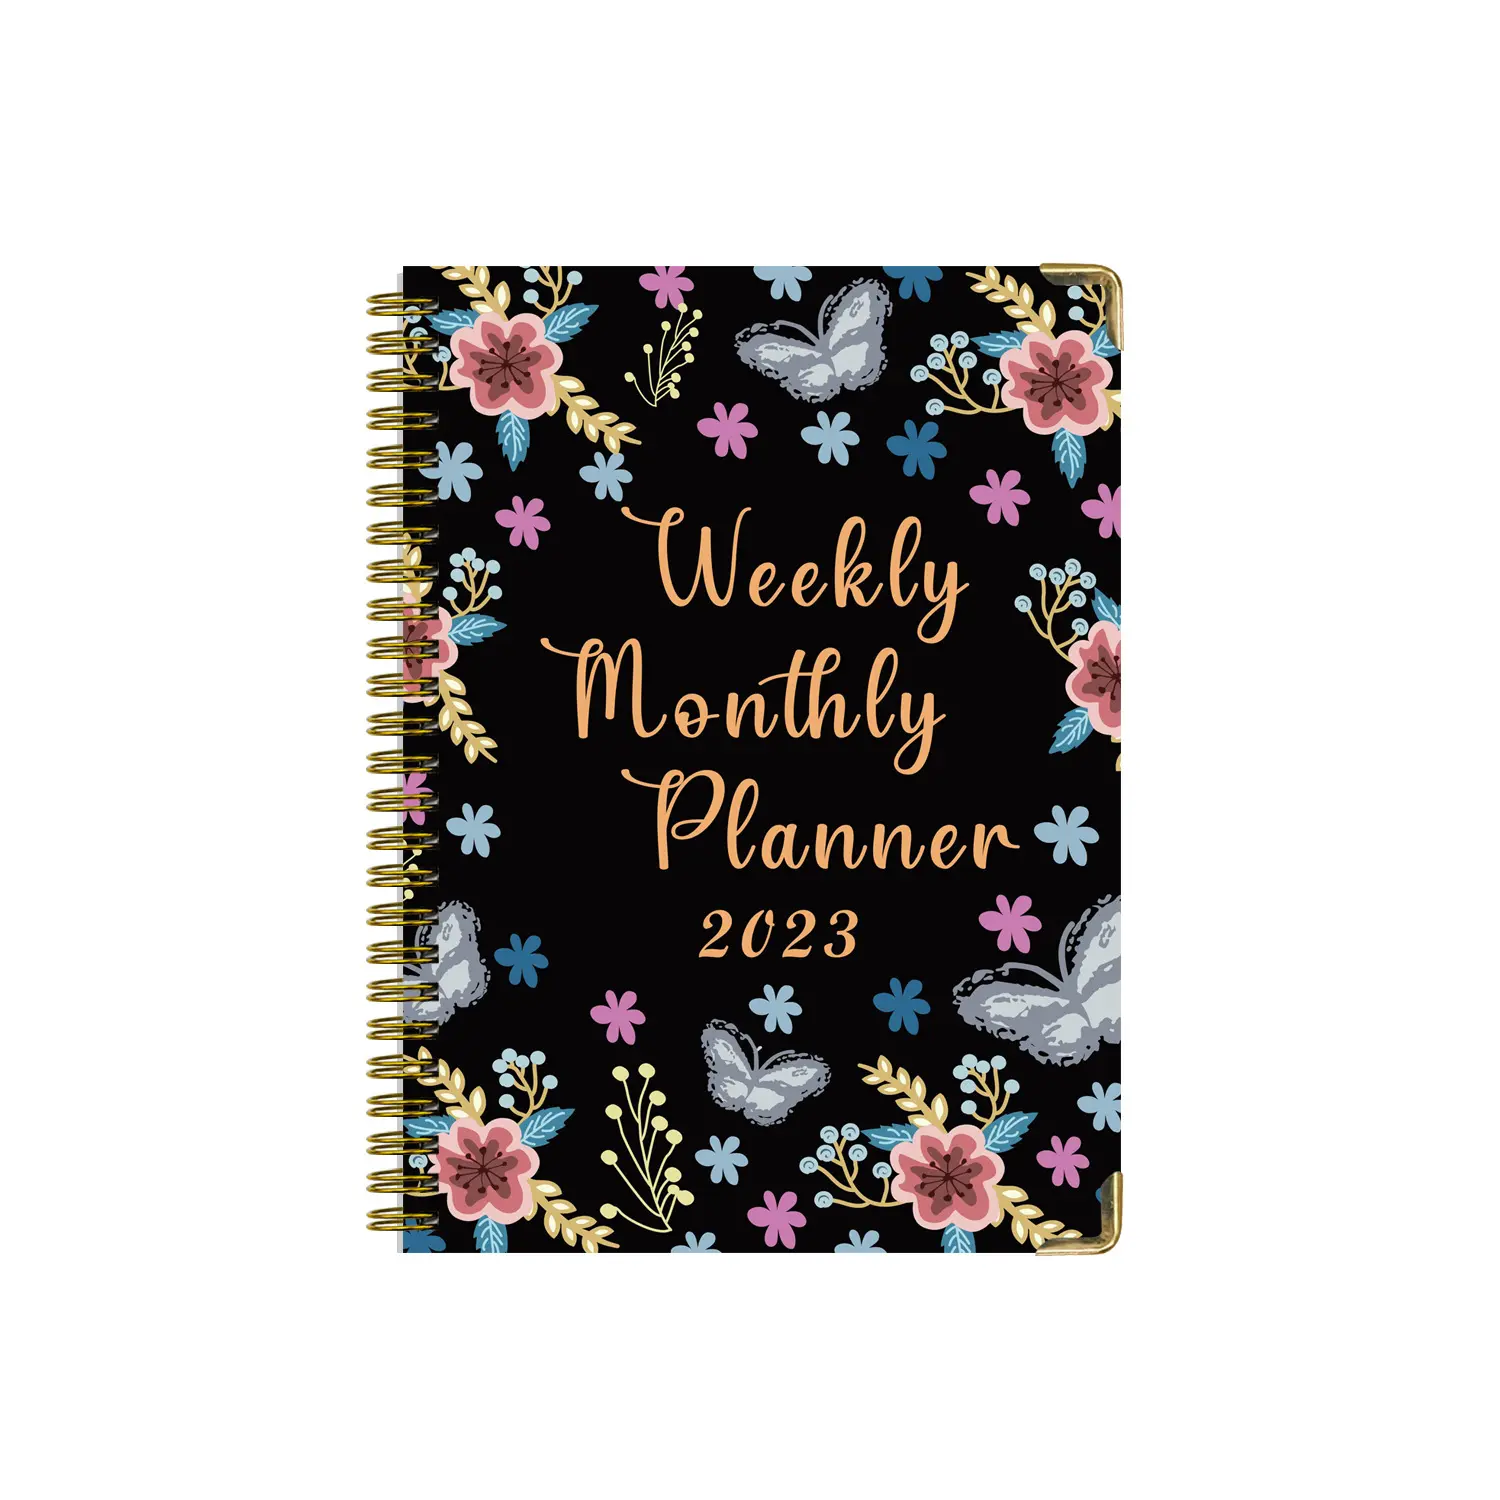 Perencana jadwal sampul keras mengikat kawat setiap hari mingguan buku rencana bulanan notebook pilihan yang disesuaikan tersedia